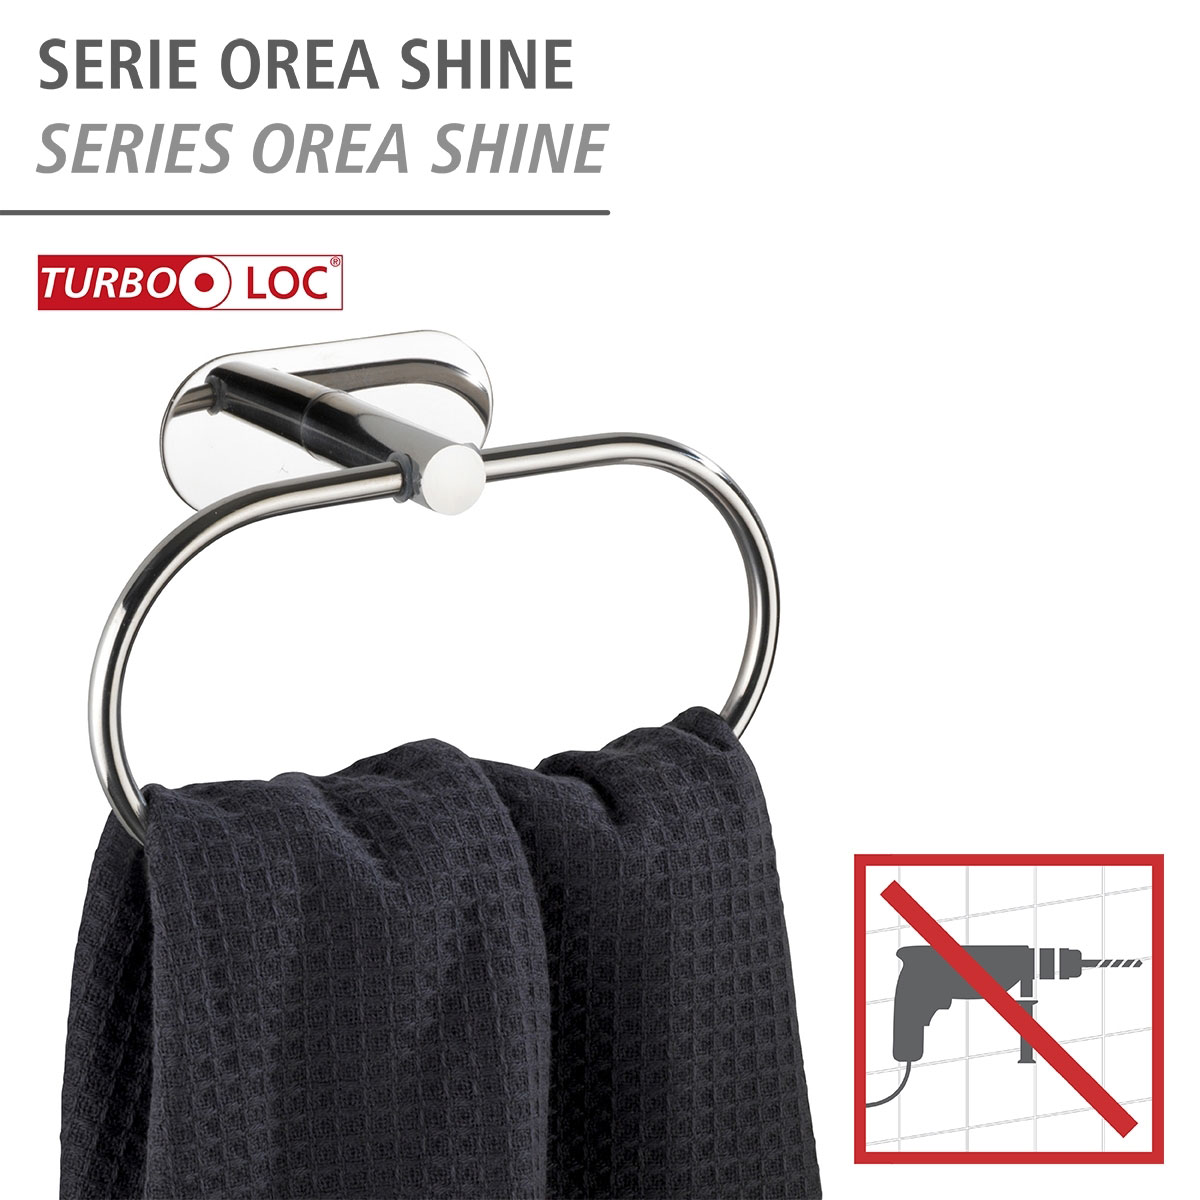 Wenko Turbo-Loc Handtuchring Shine Orea 503695 